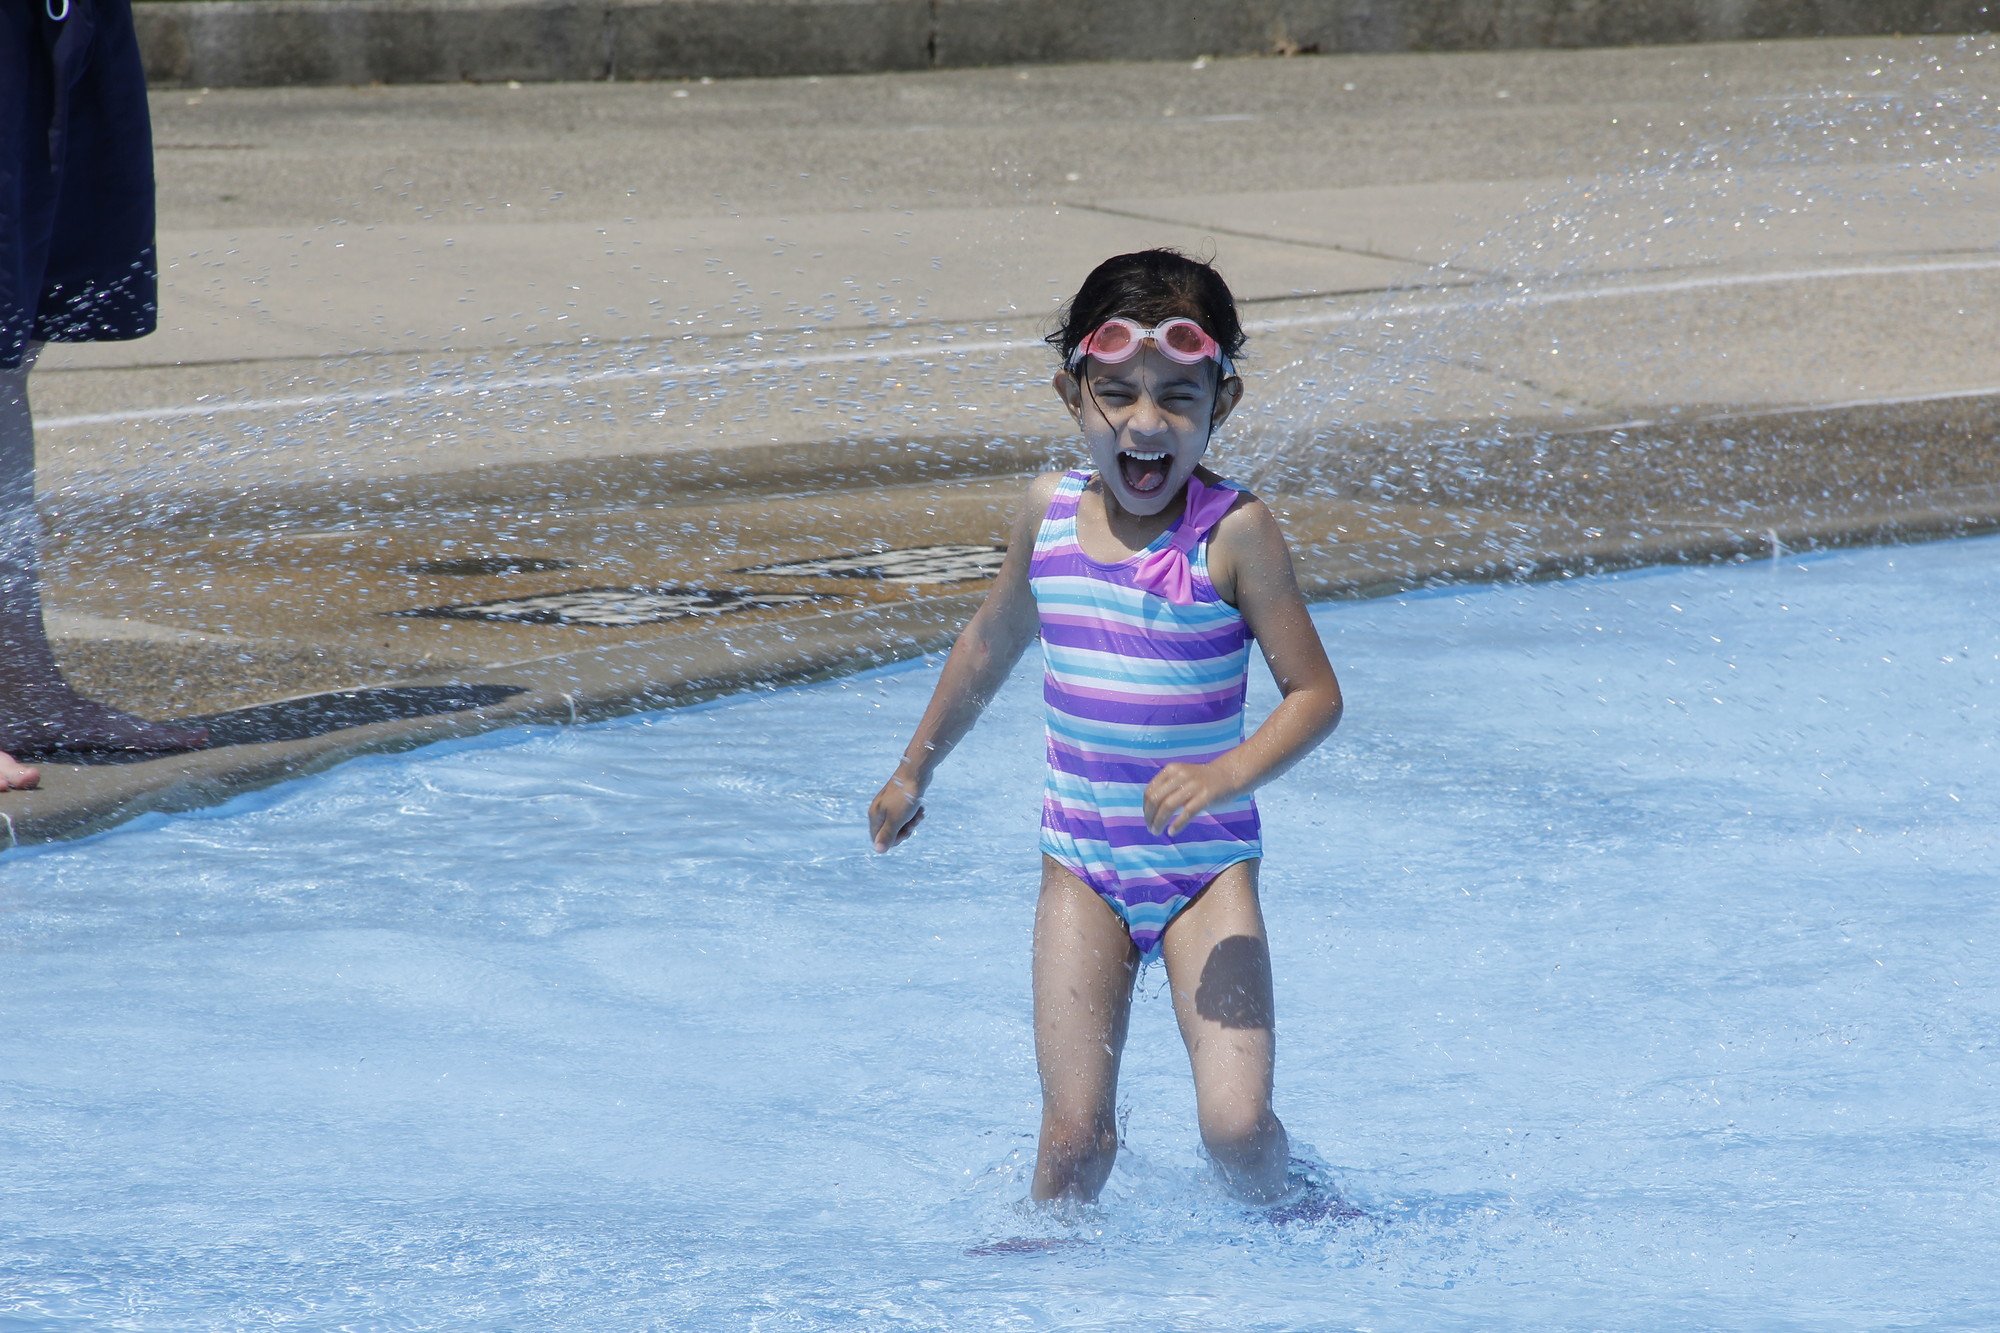 Natalie Suriel, 5, had fun running through the spray at the pool.